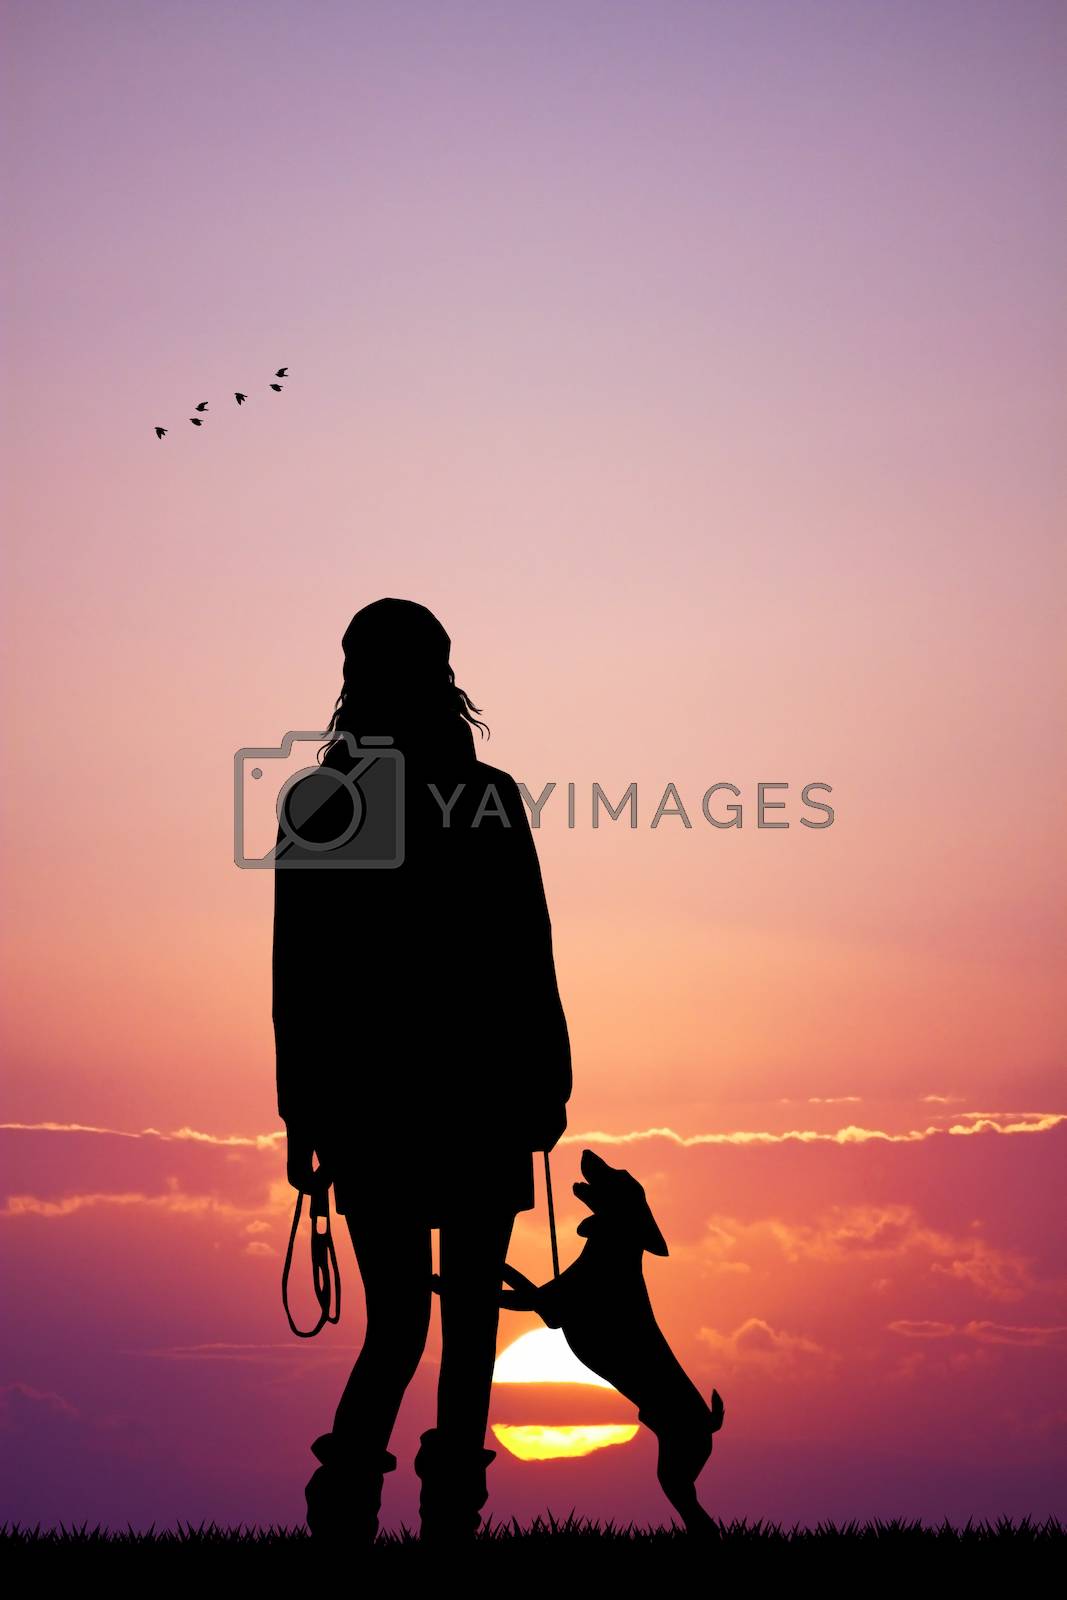 Royalty free image of girl and dog by adrenalina